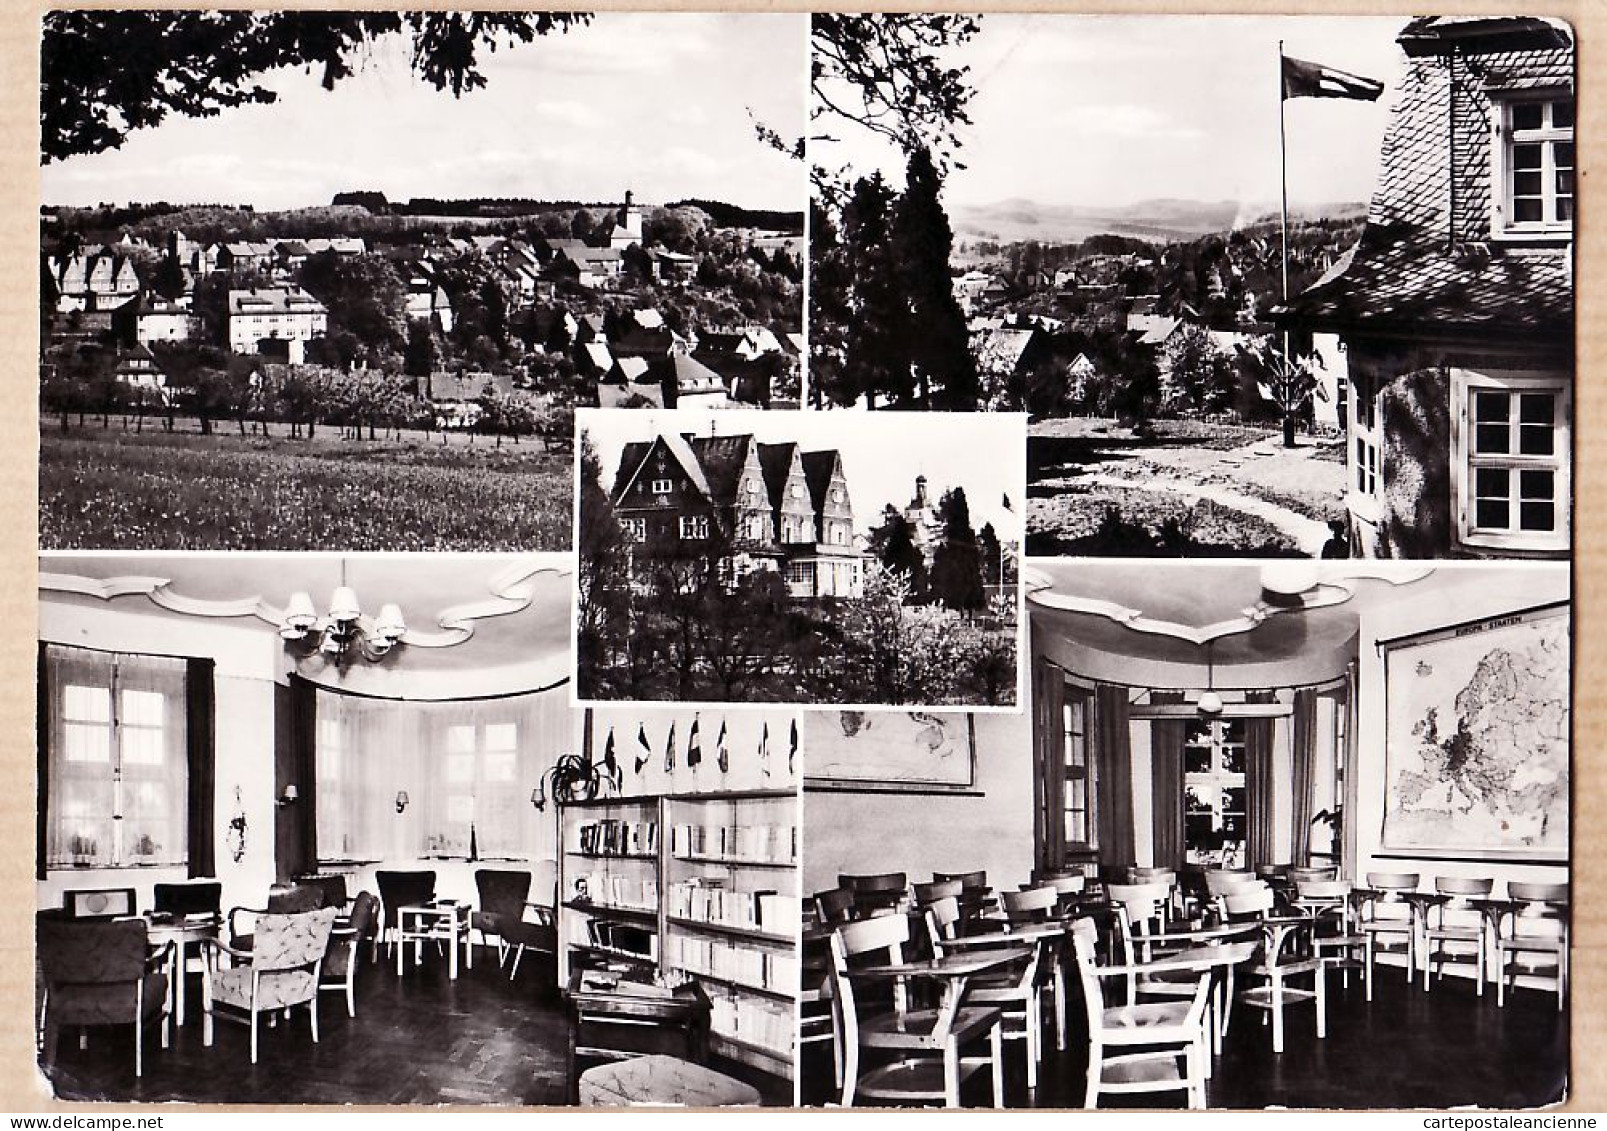 23657 / Europa-Haus MARIENBERG Haus Der Jugend Maison De La Jeunesse House Of Youth 1950s- KÖNIGSMANN-RÖDER  - Bad Marienberg